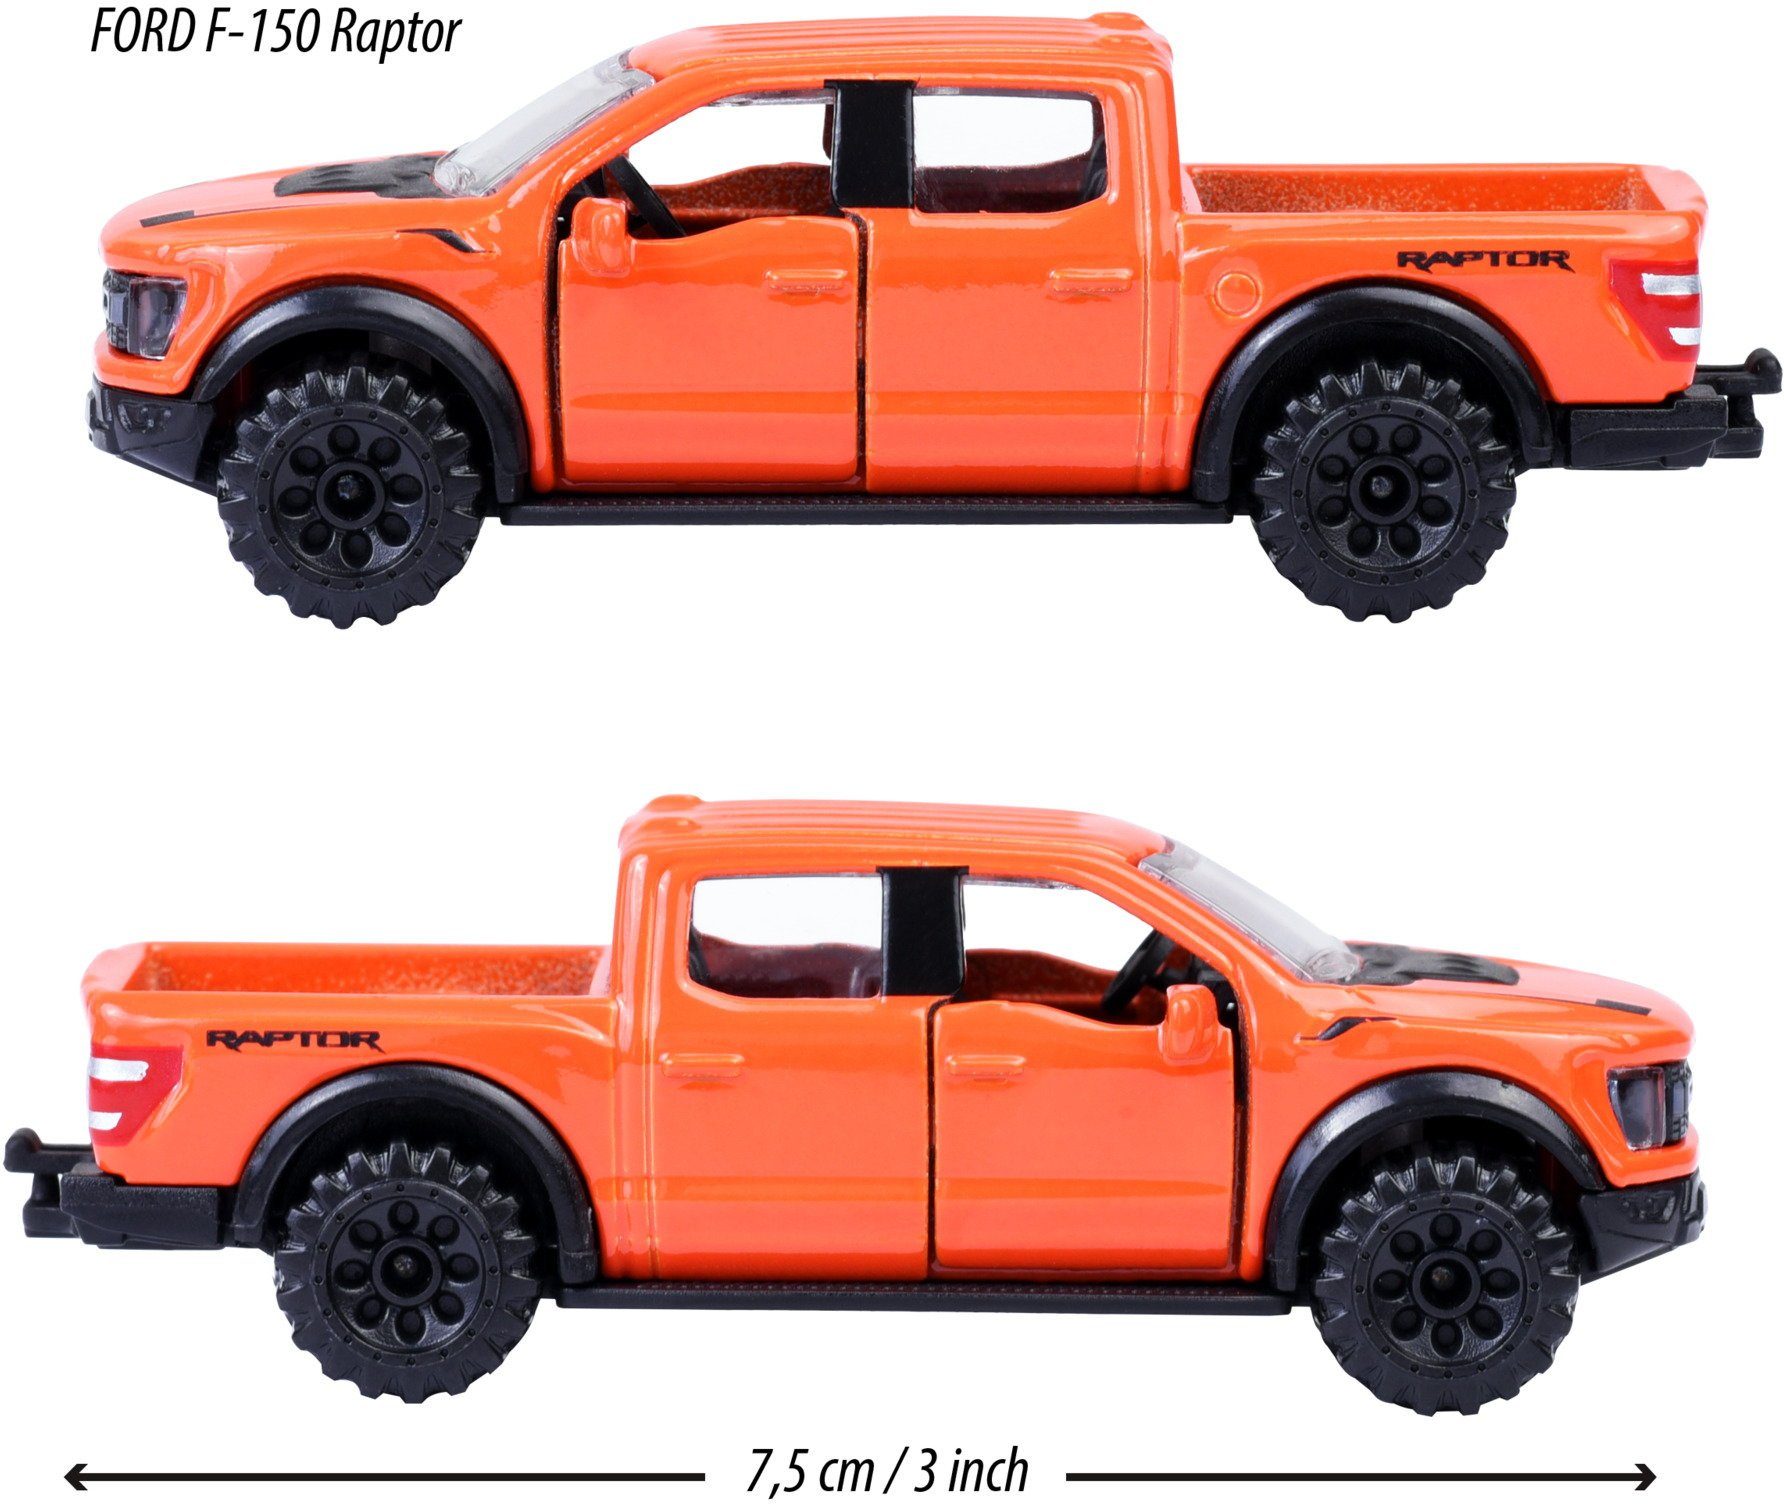 majORETTE Spielzeug-Auto Premium Ford Cars Spielzeugauto orange 212053052Q39 Raptor F-150